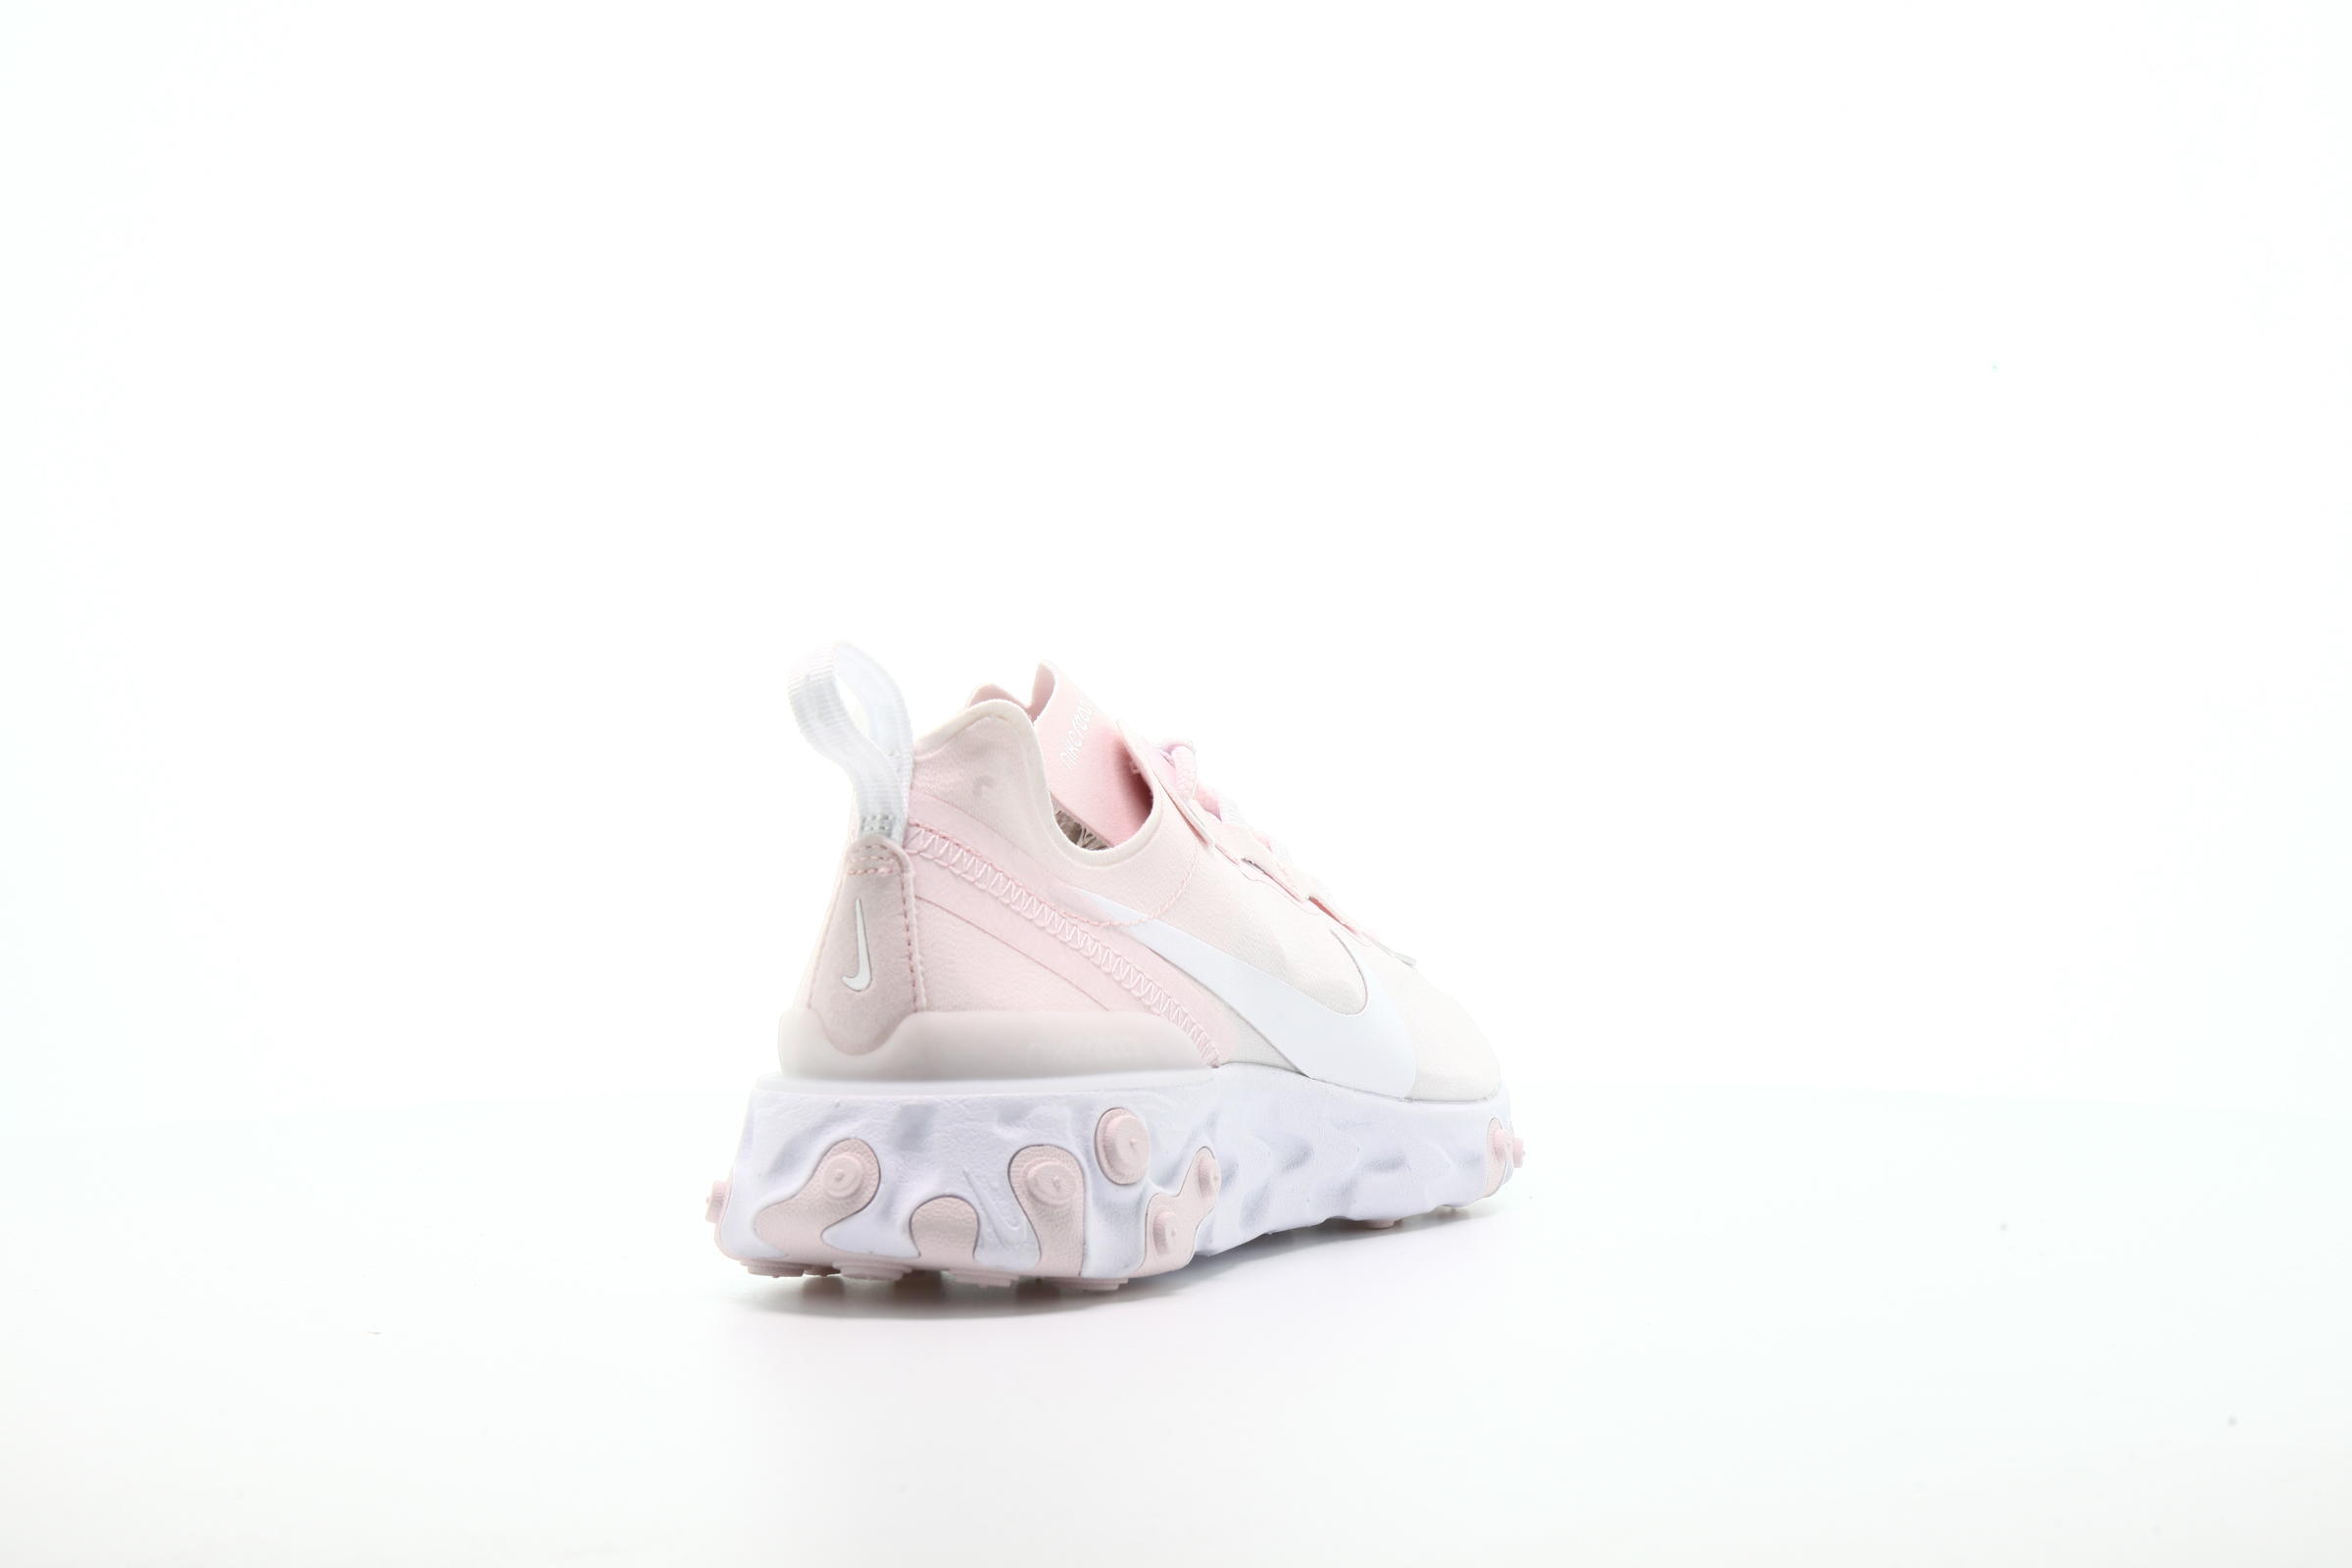 Nike WMNS React Element 55 "Pale Pink"